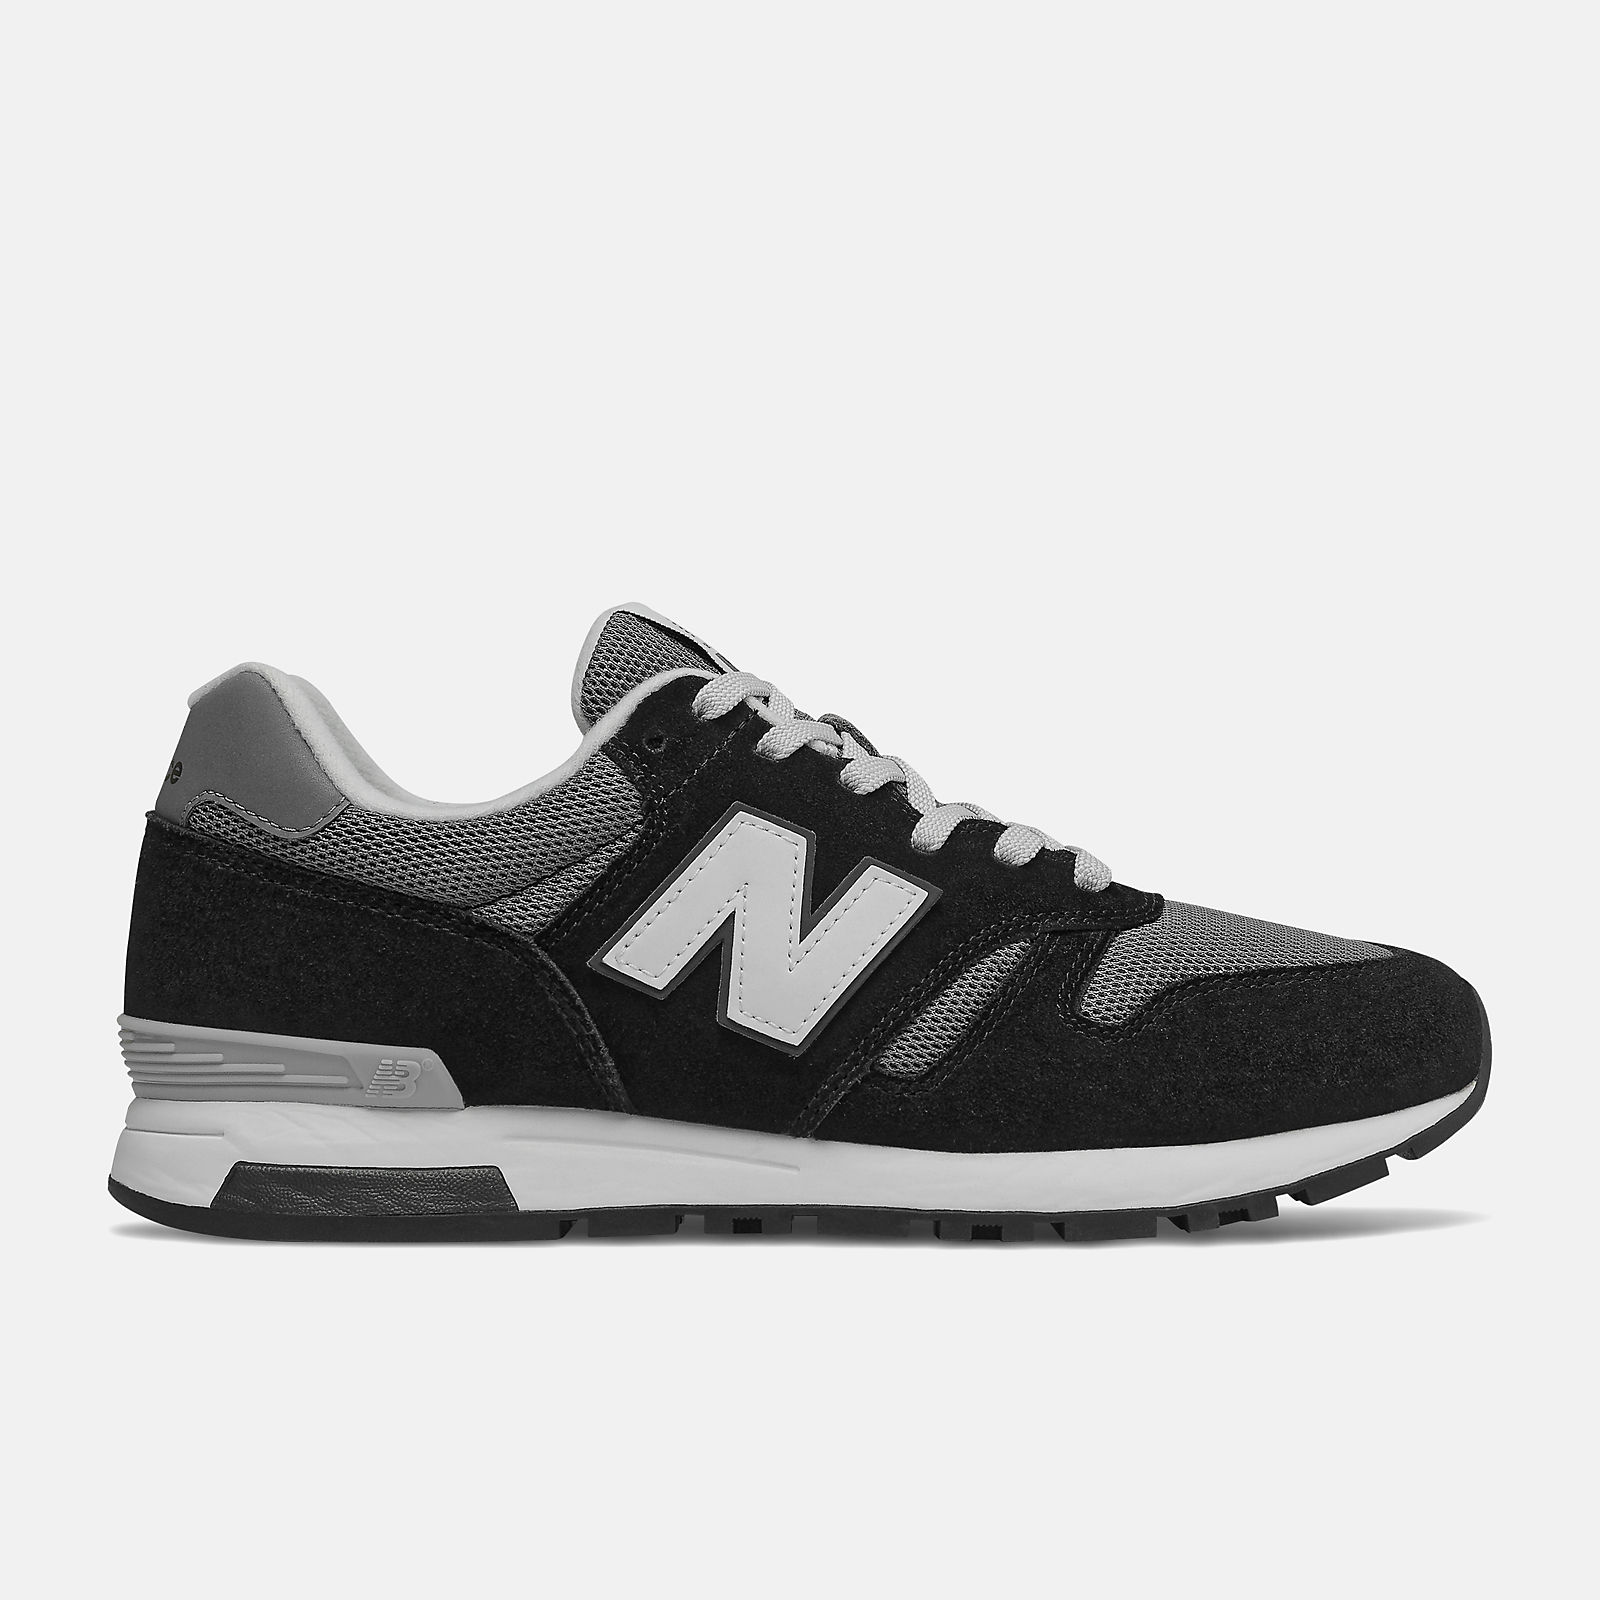 565 Shoes - New Balance